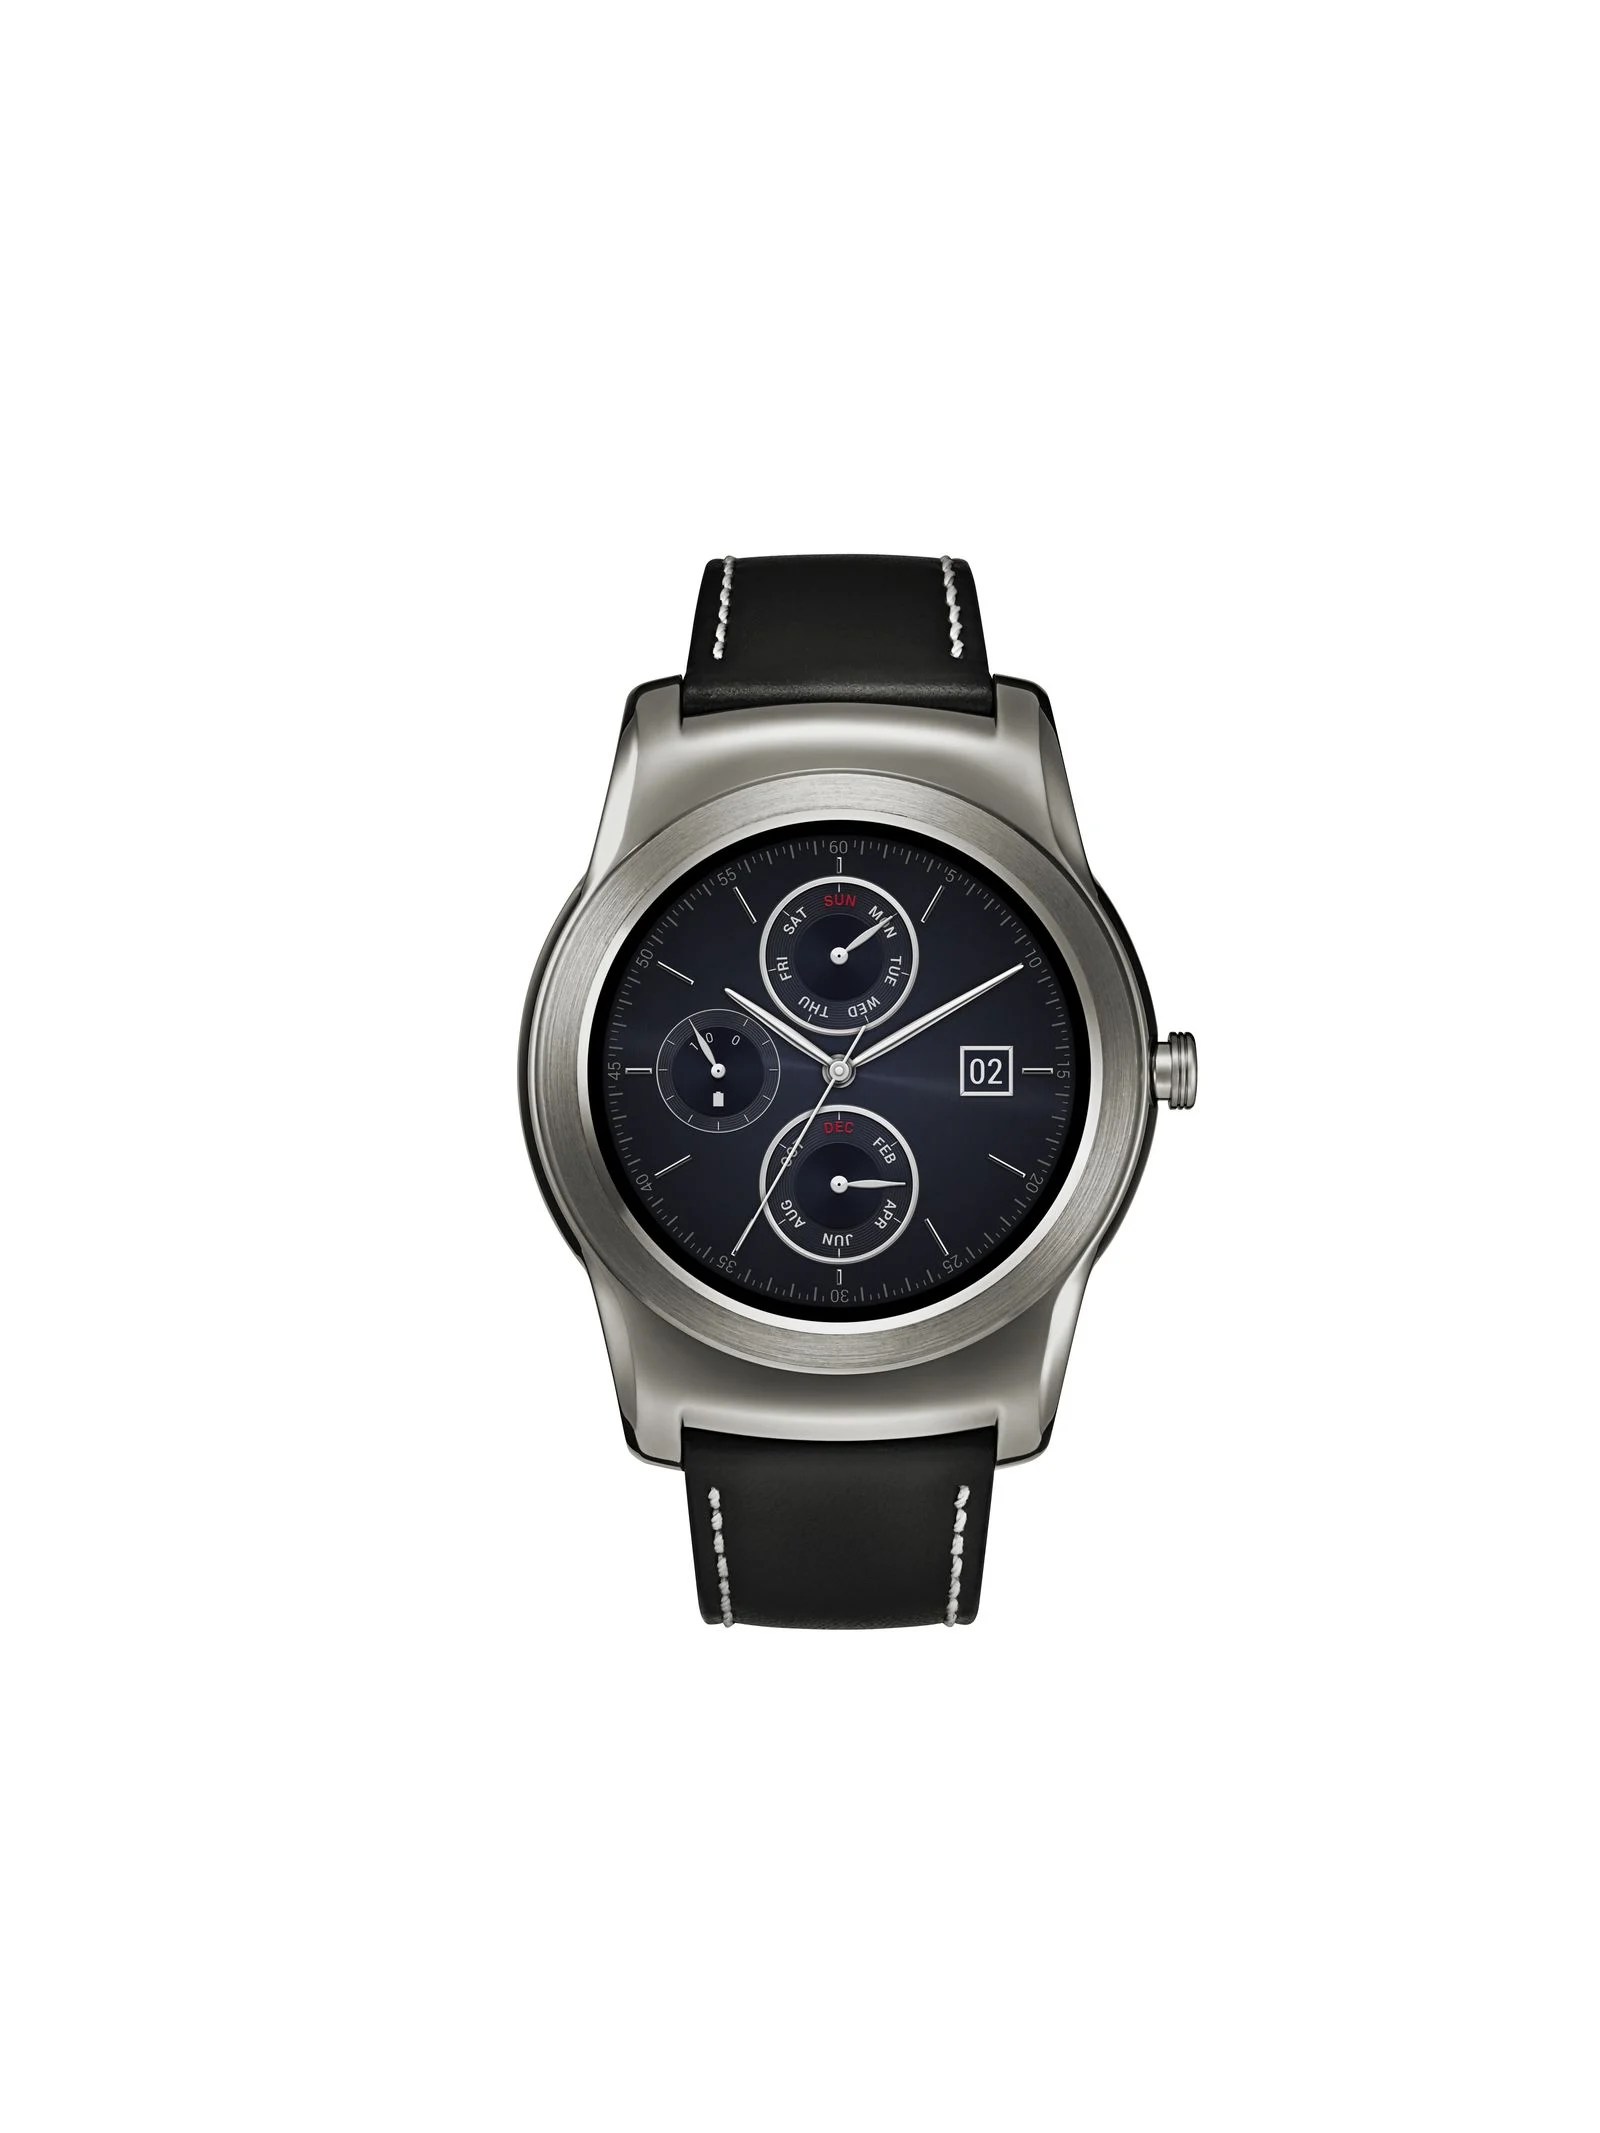 🔥 Soldes : LG G Watch Urbane à 89 euros au lieu de 350 euros chez Bouygues Telecom